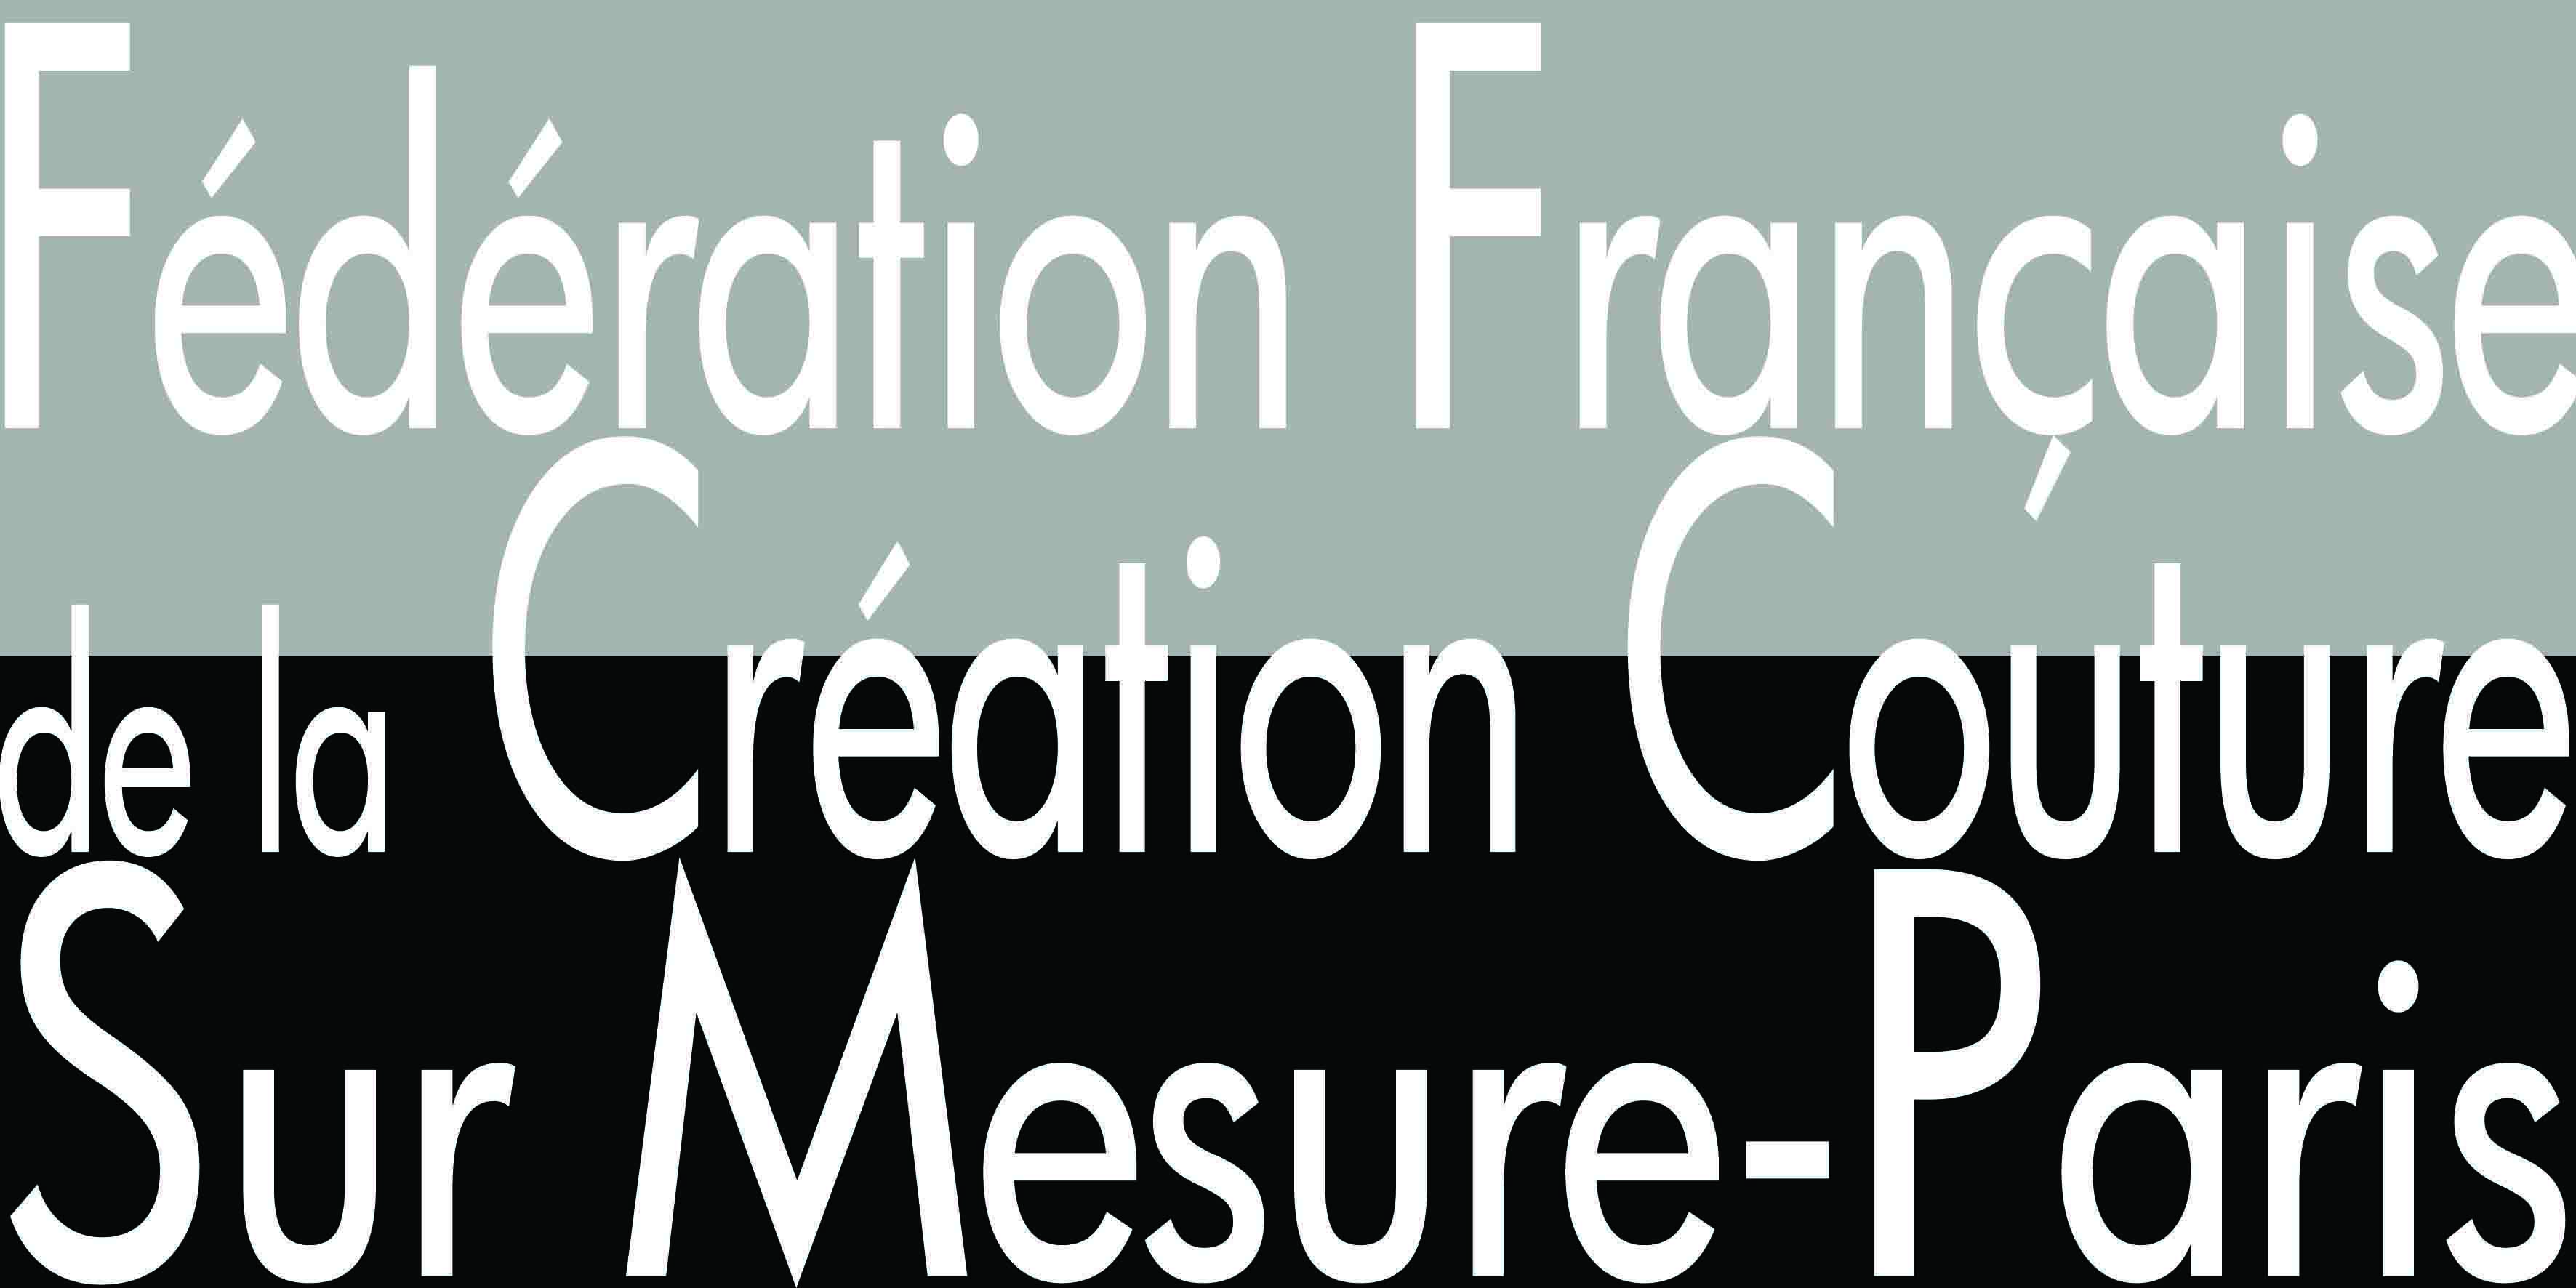 fede couture logo web